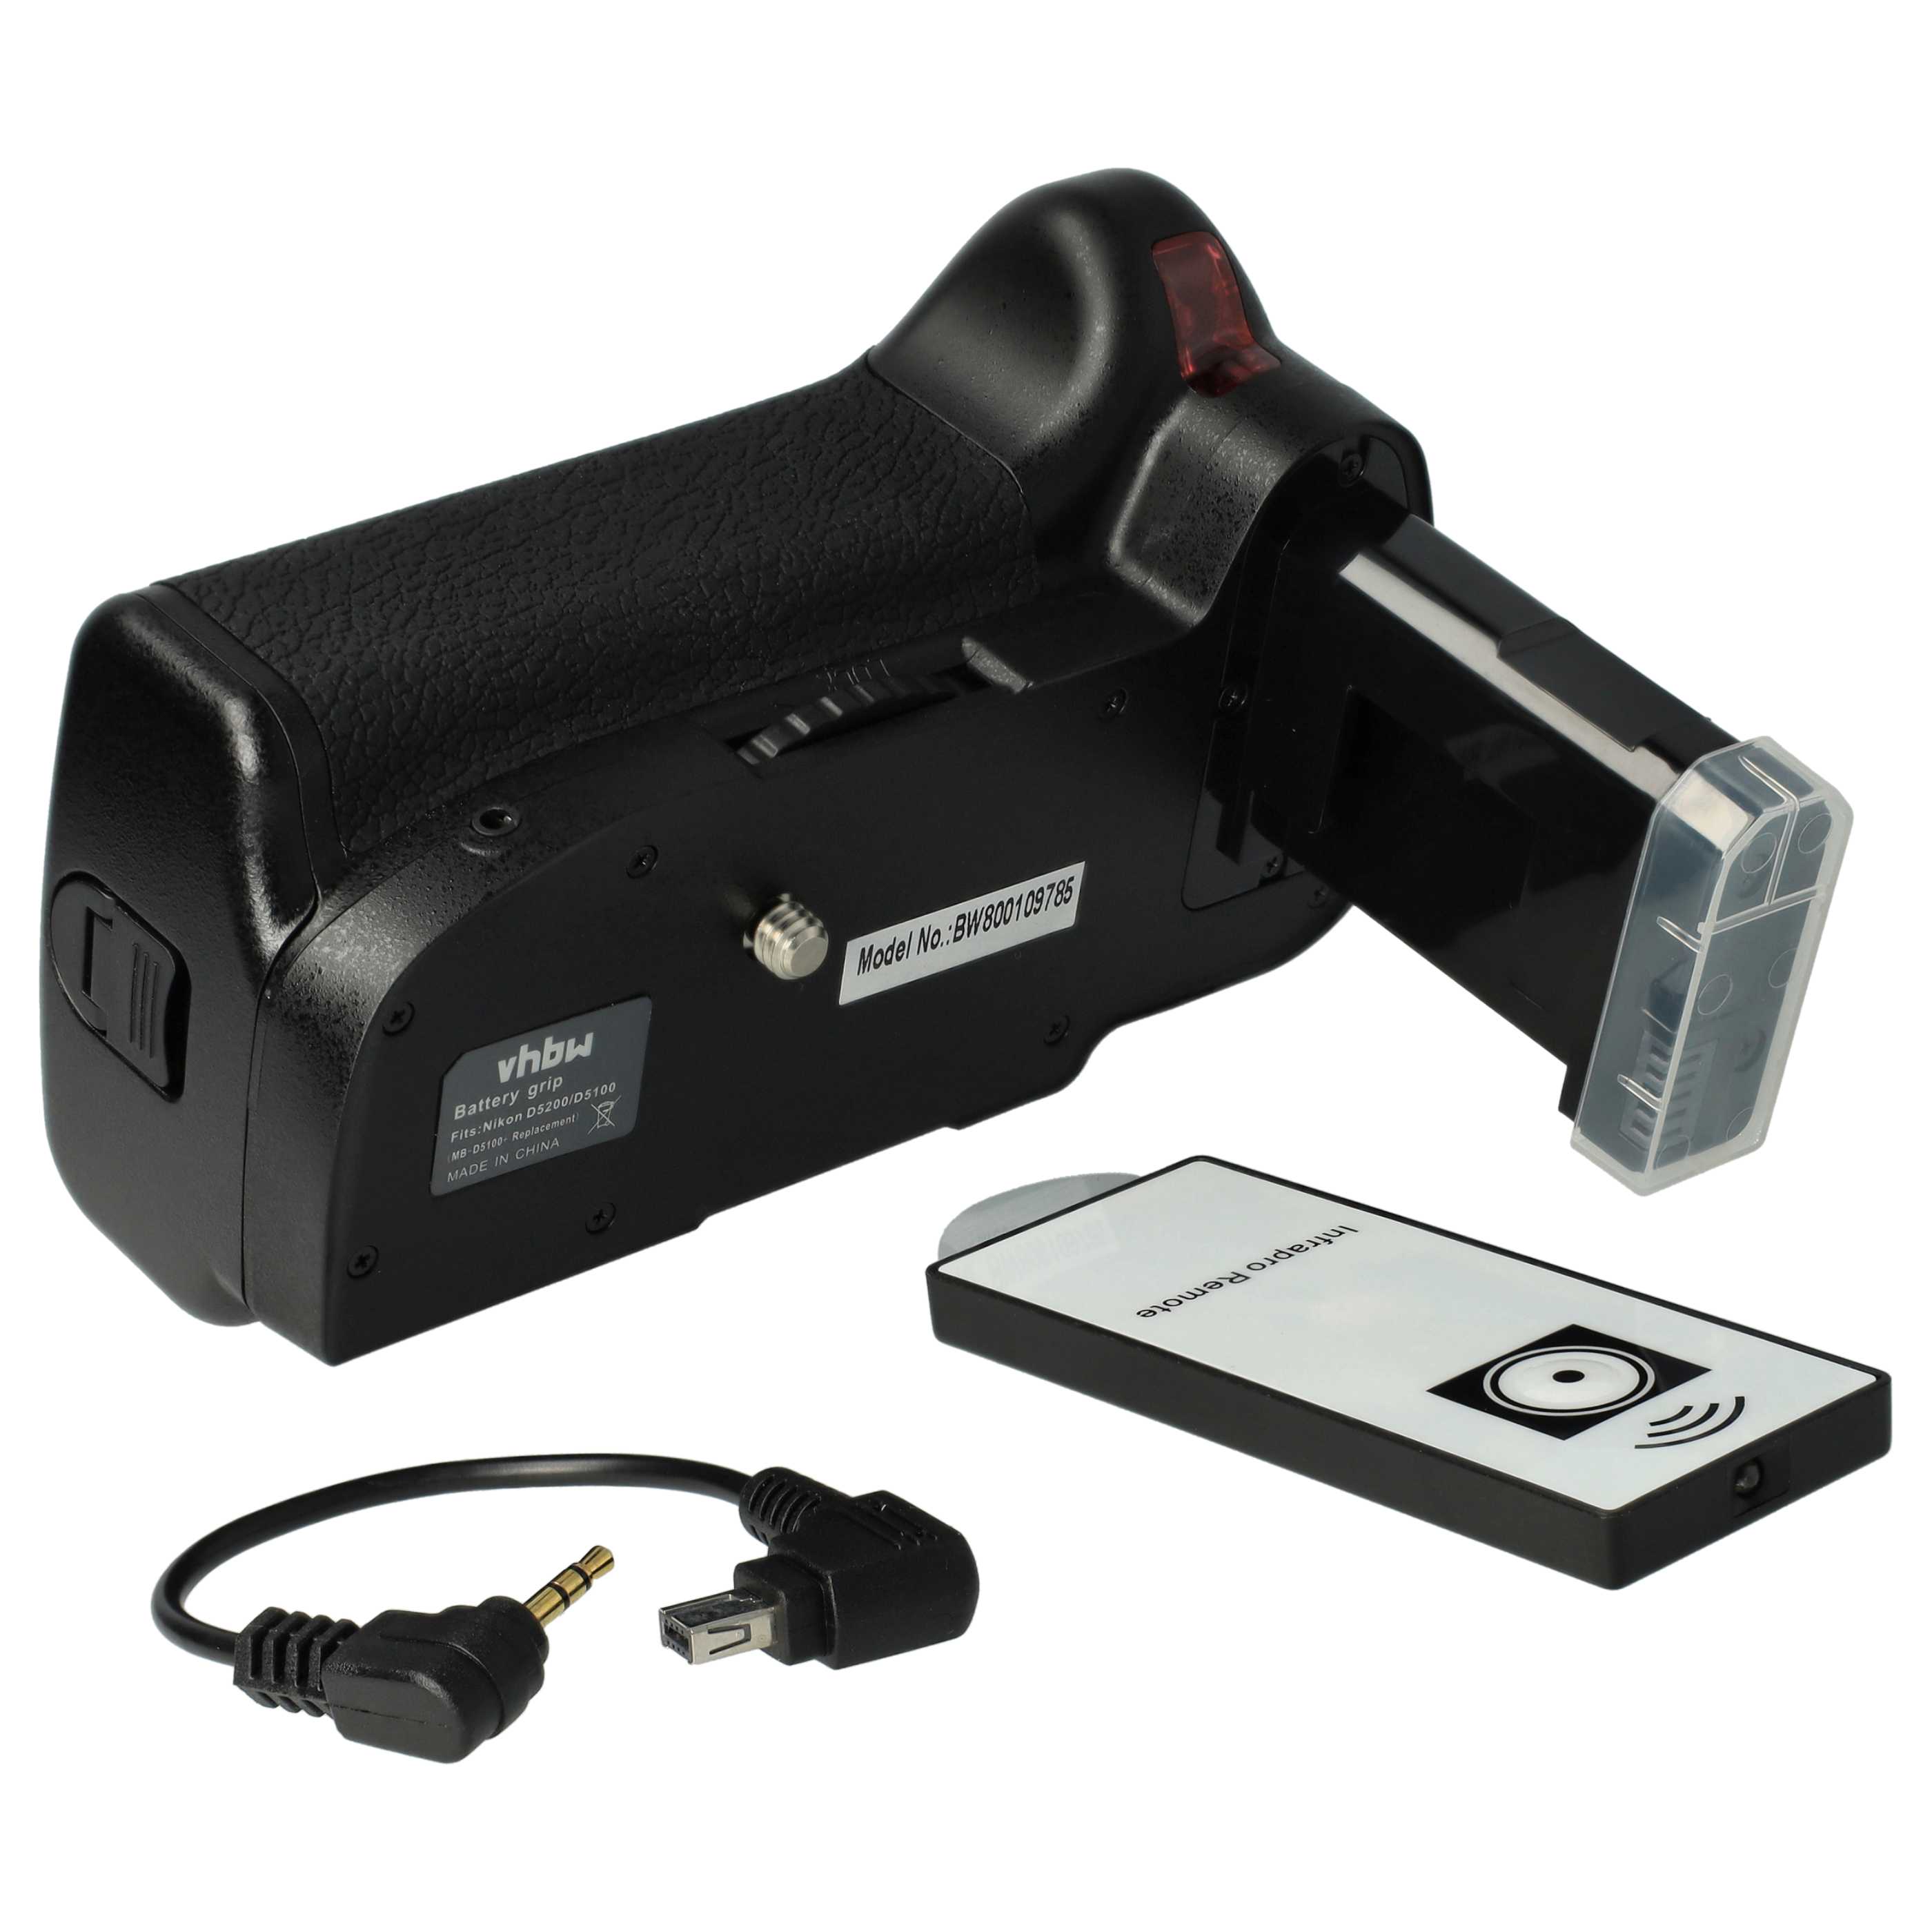 Batteriegriff passend für Nikon D5100, D5200, D5300 Kamera - Inkl. Wählrad, Inkl. Auslöser 